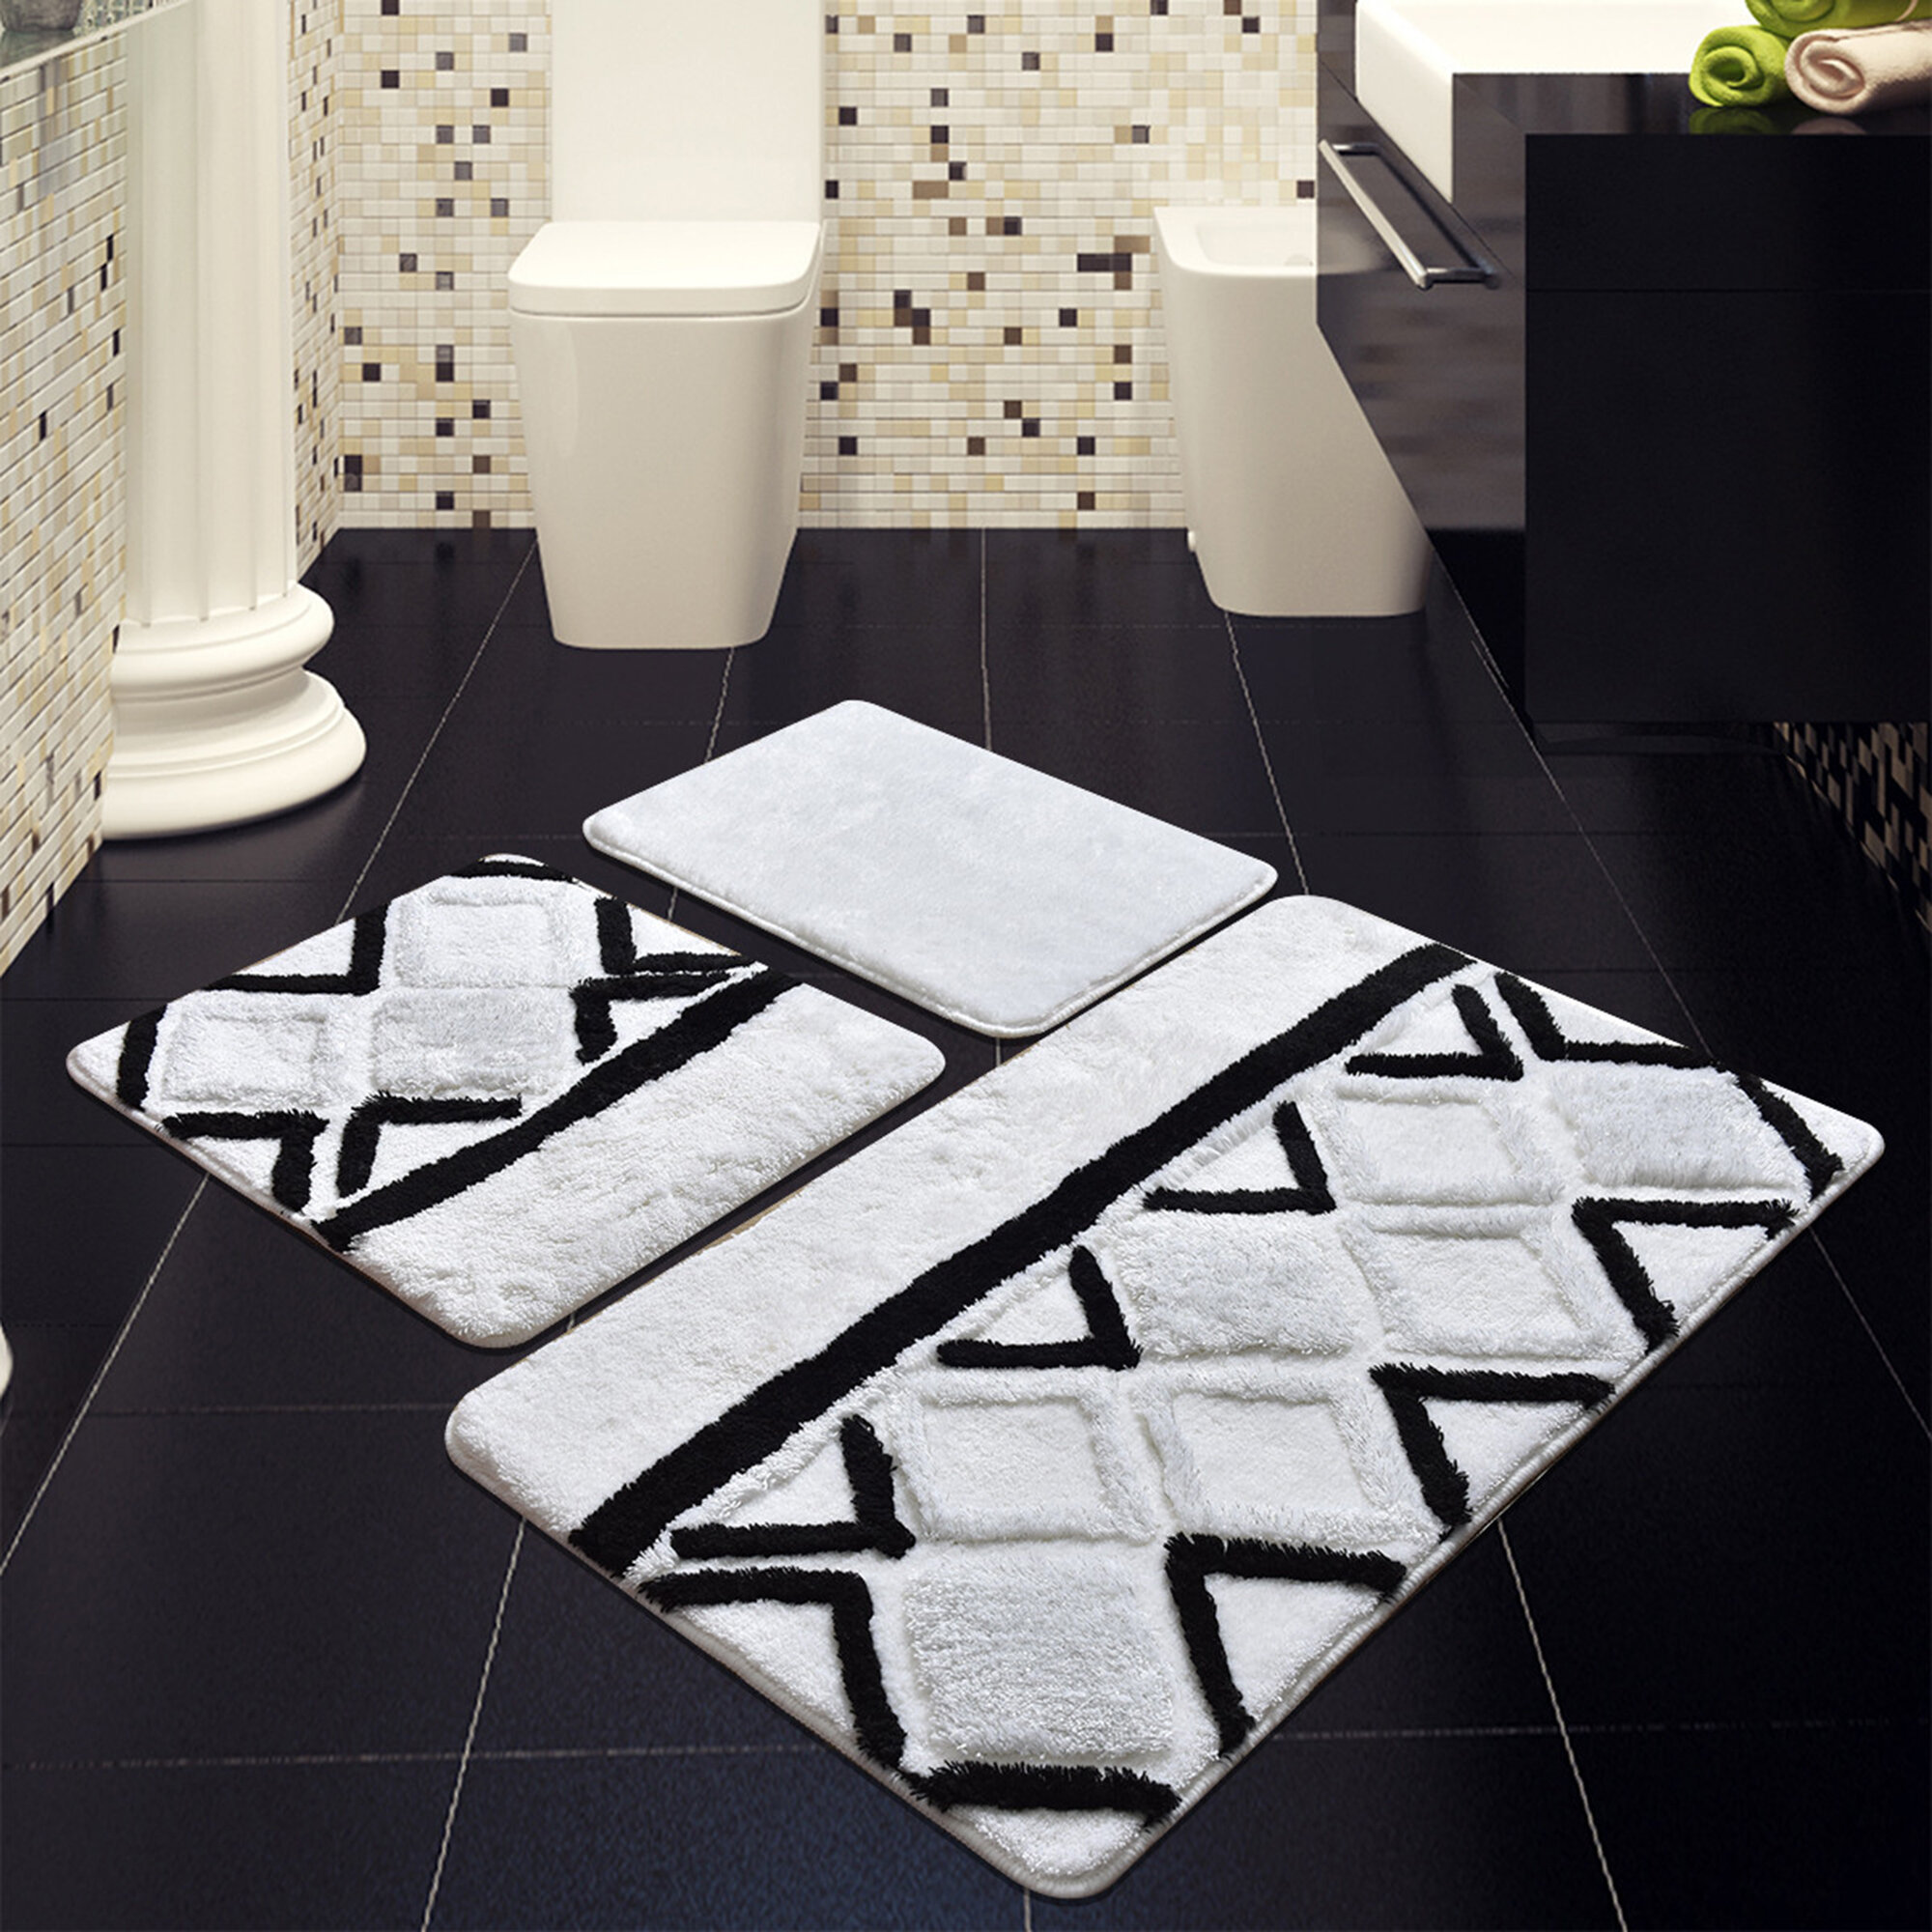 Black and White Bath Rugs Bathroom Rugs Set Bath Mat Flatwoven